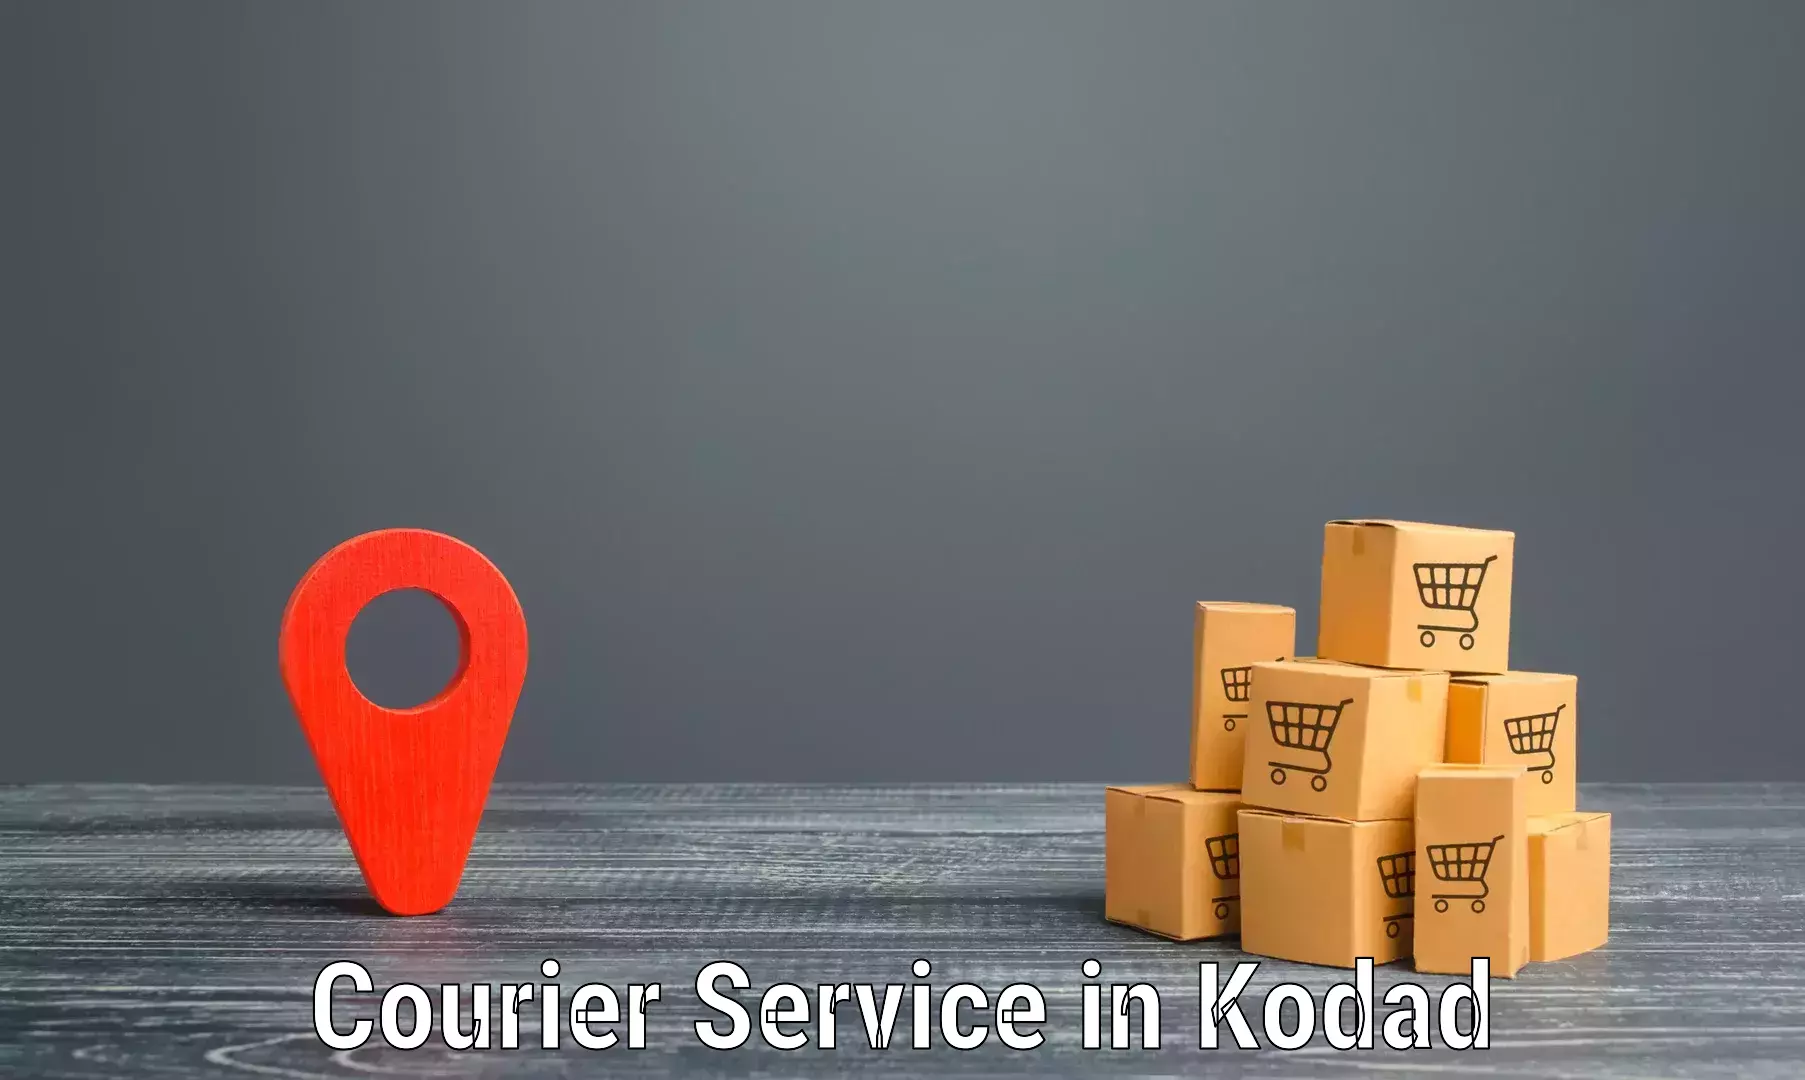 Personal parcel delivery in Kodad